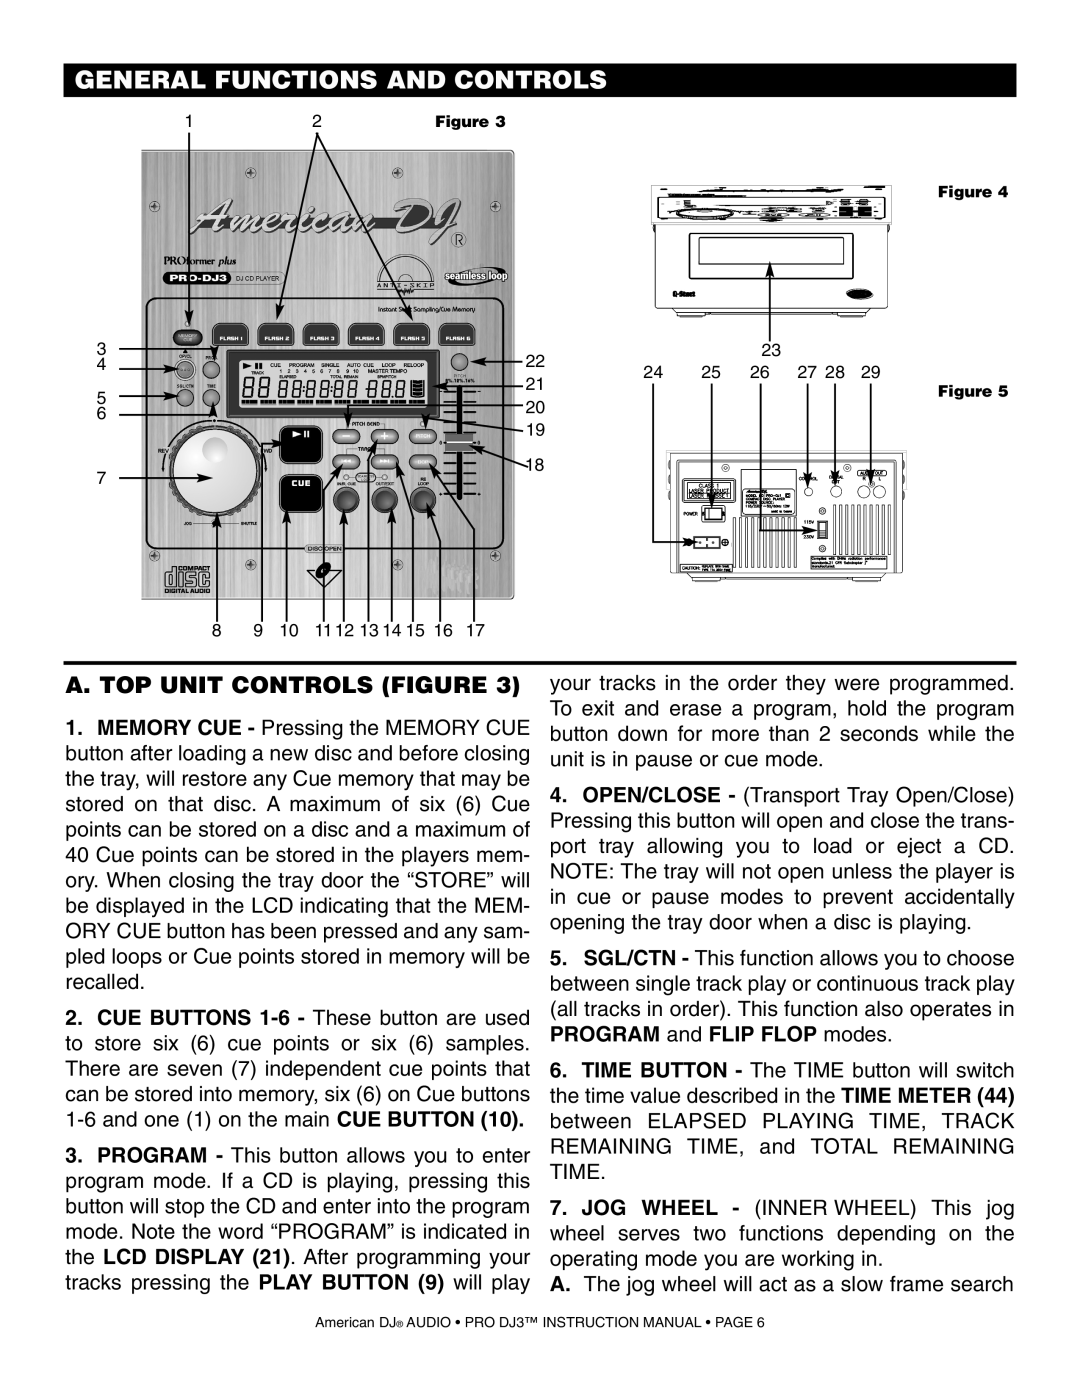 American Audio PRO DJ 3 manual General Functions And Controls, A. Top Unit Controls Figure 